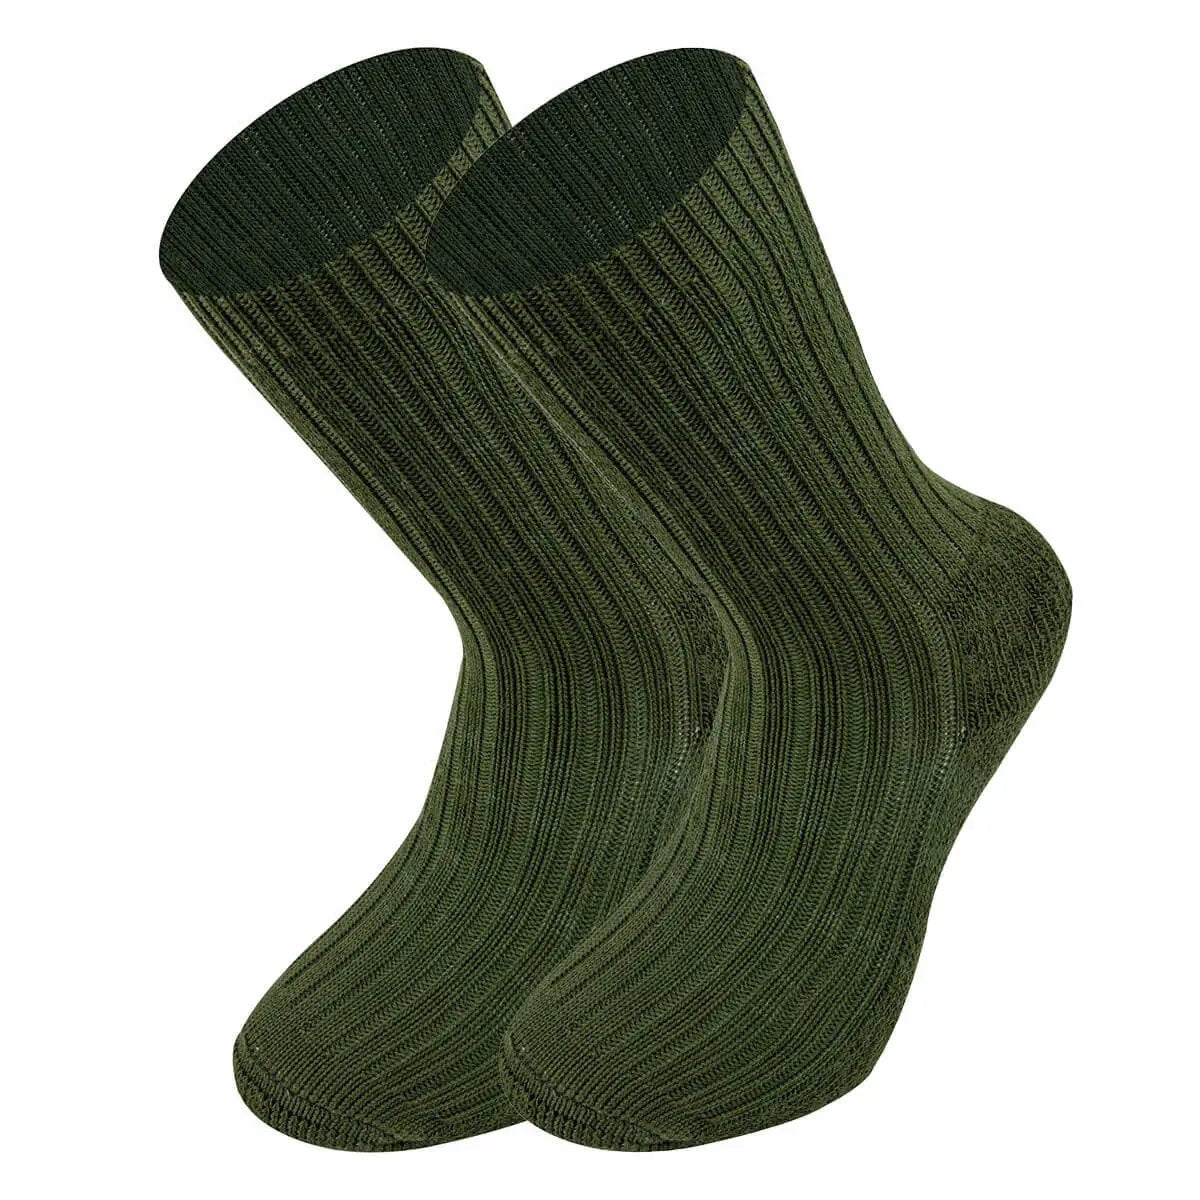 Highlander Forces British Army Style Combat Sock - John Bull Clothing